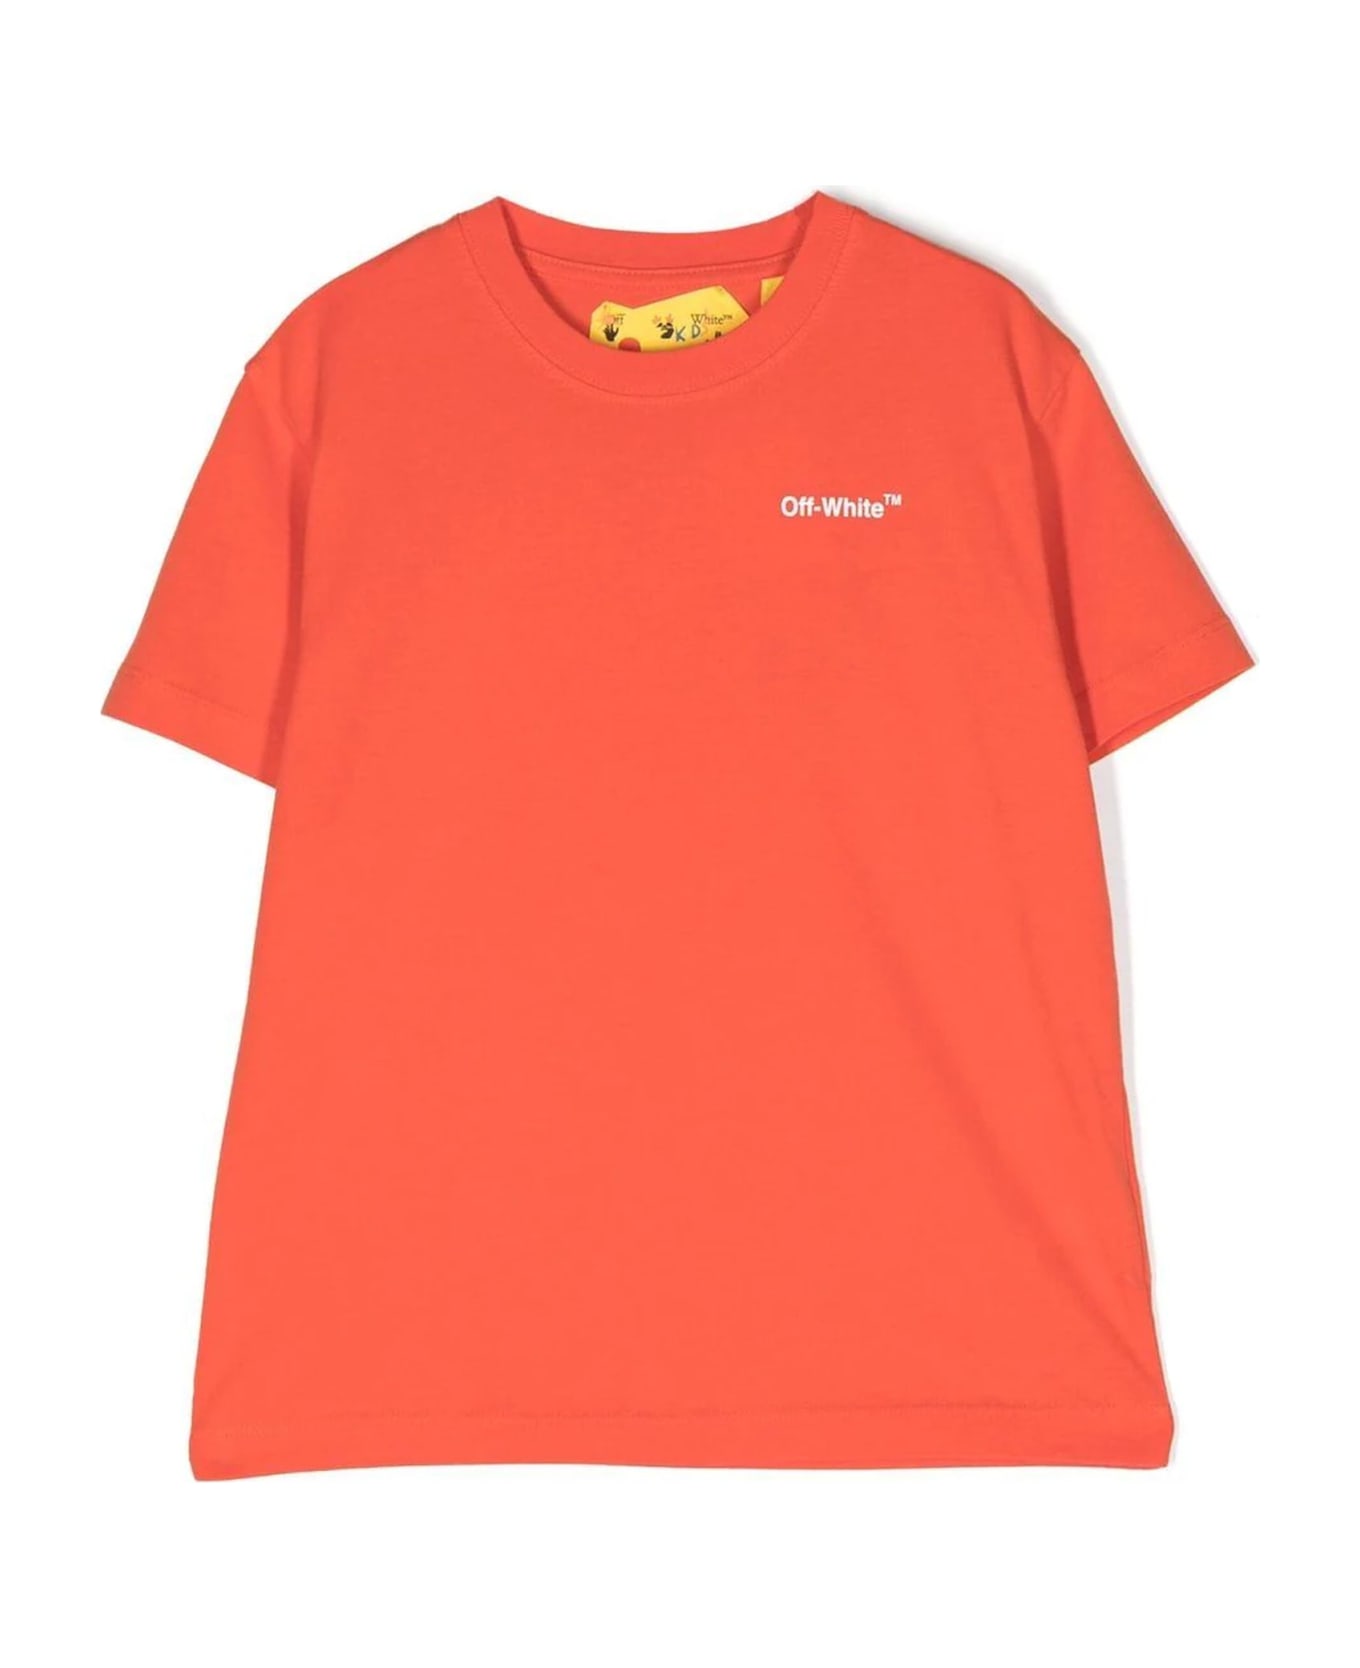 Off-White Orange Cotton T-shirt - Arancio